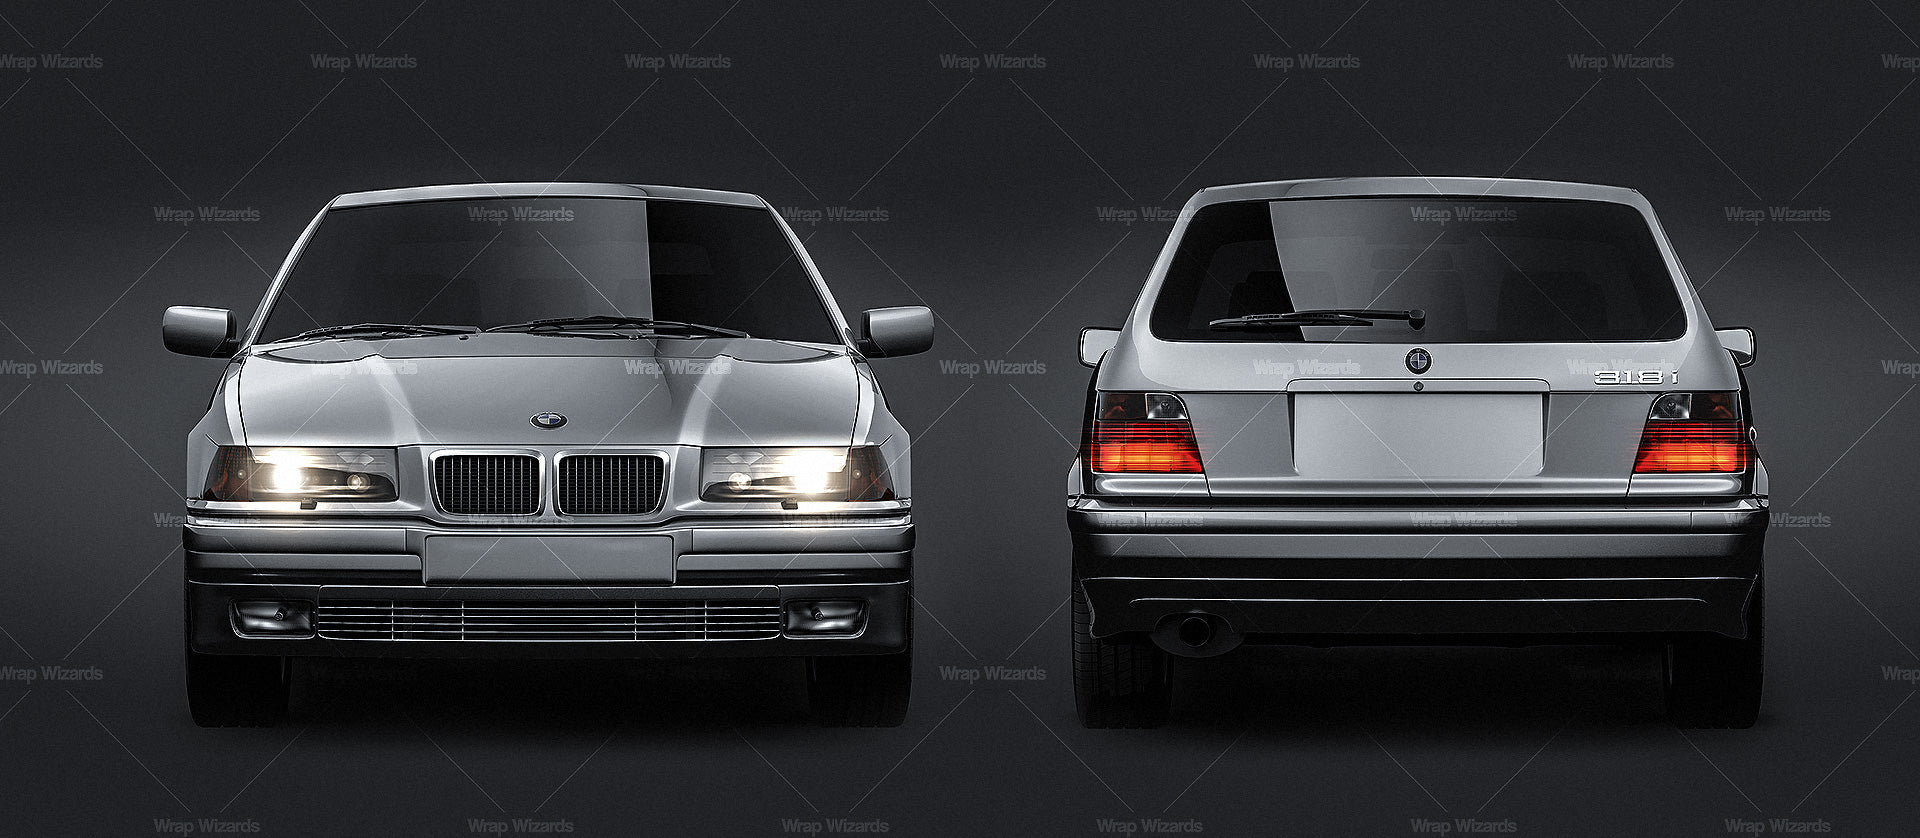 BMW 3-Series E36 Touring 1990 - Car Mockup